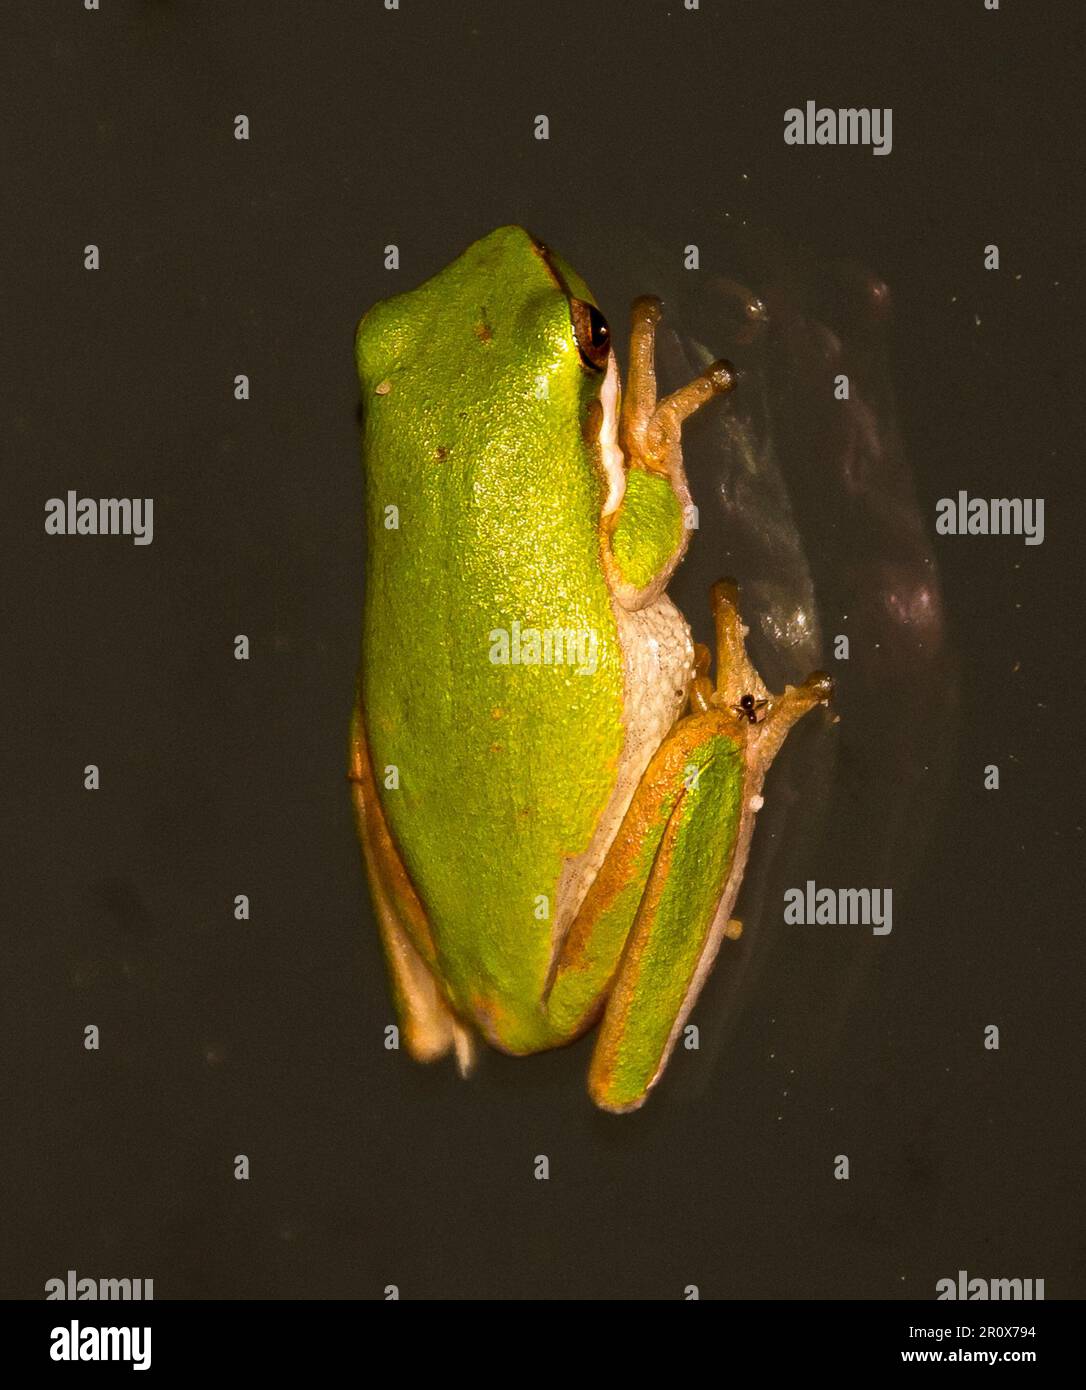 Australian Dainty Green tree frog, Graceful tree frog  (litoria gracilenta) resting shiny dark window after rain. Bright green with yellow and orange. Stock Photo